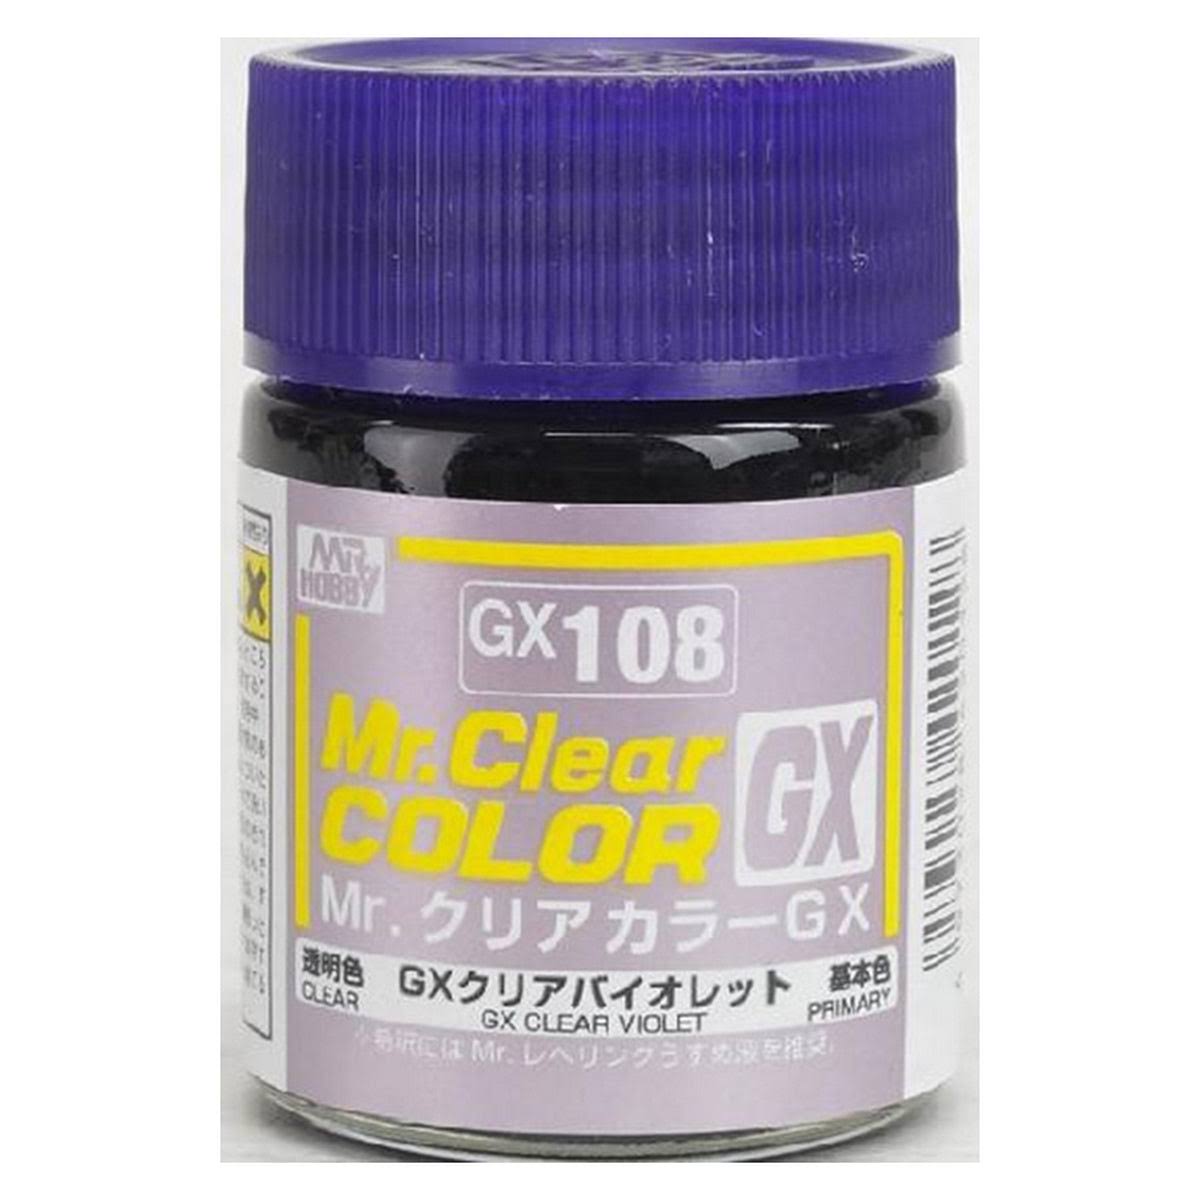 Mr.Hobby / Gunze GX108 Mr.Clear Colour GX Clear Violet (18ml) Modeling